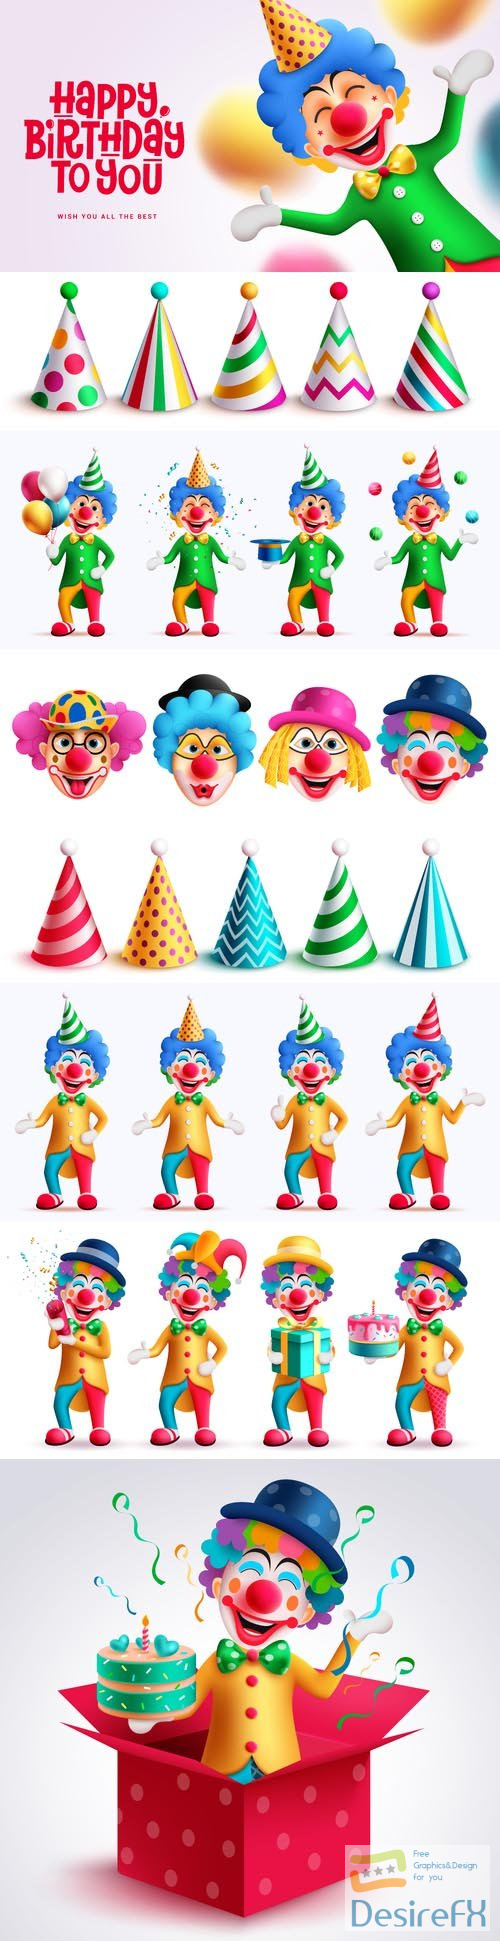 Birthday clown character vector design, happy birthday text design